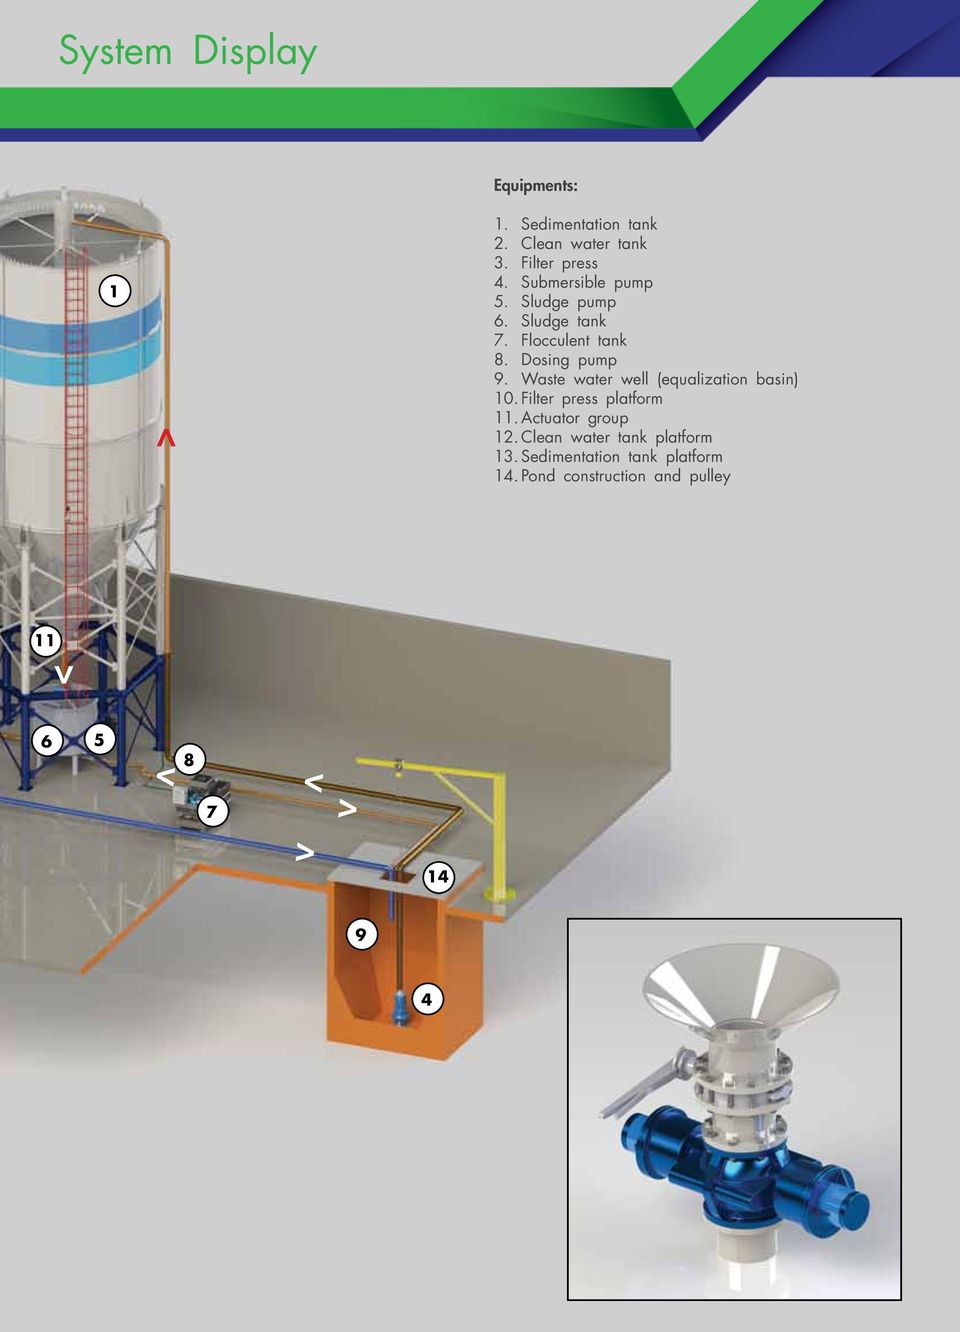 Waste water well (equalization basin) 10. Filter press platform 11. Actuator group 12.